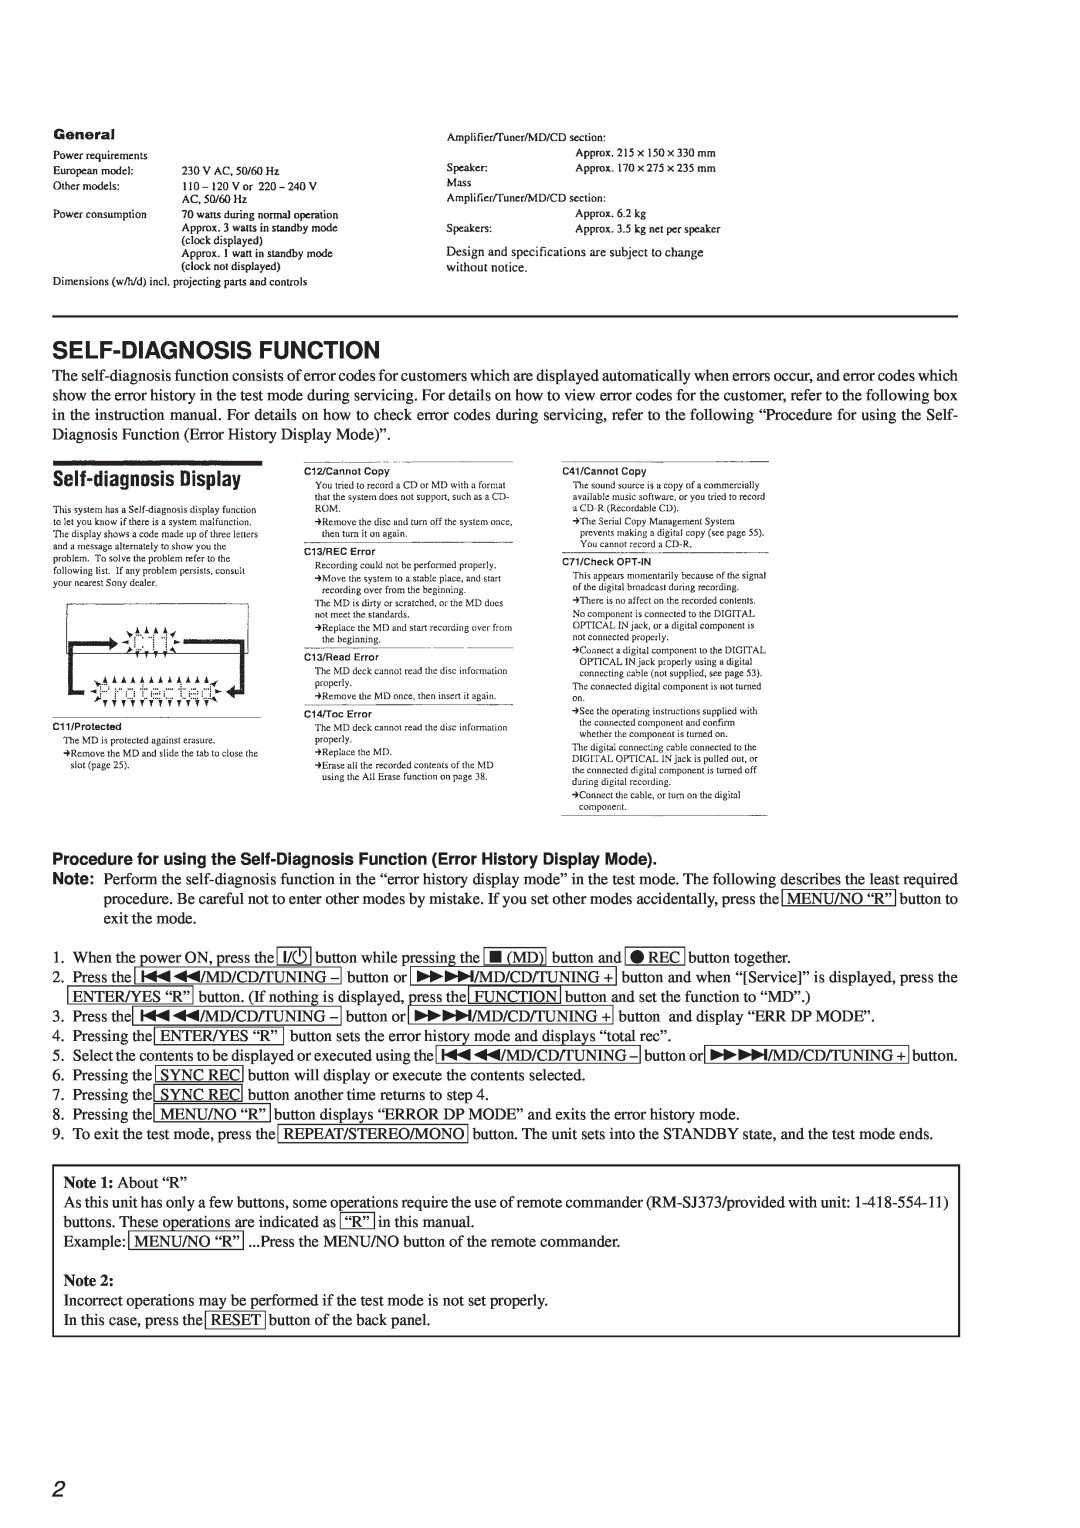 Sony HCD-MD373 service manual Self-Diagnosisfunction 